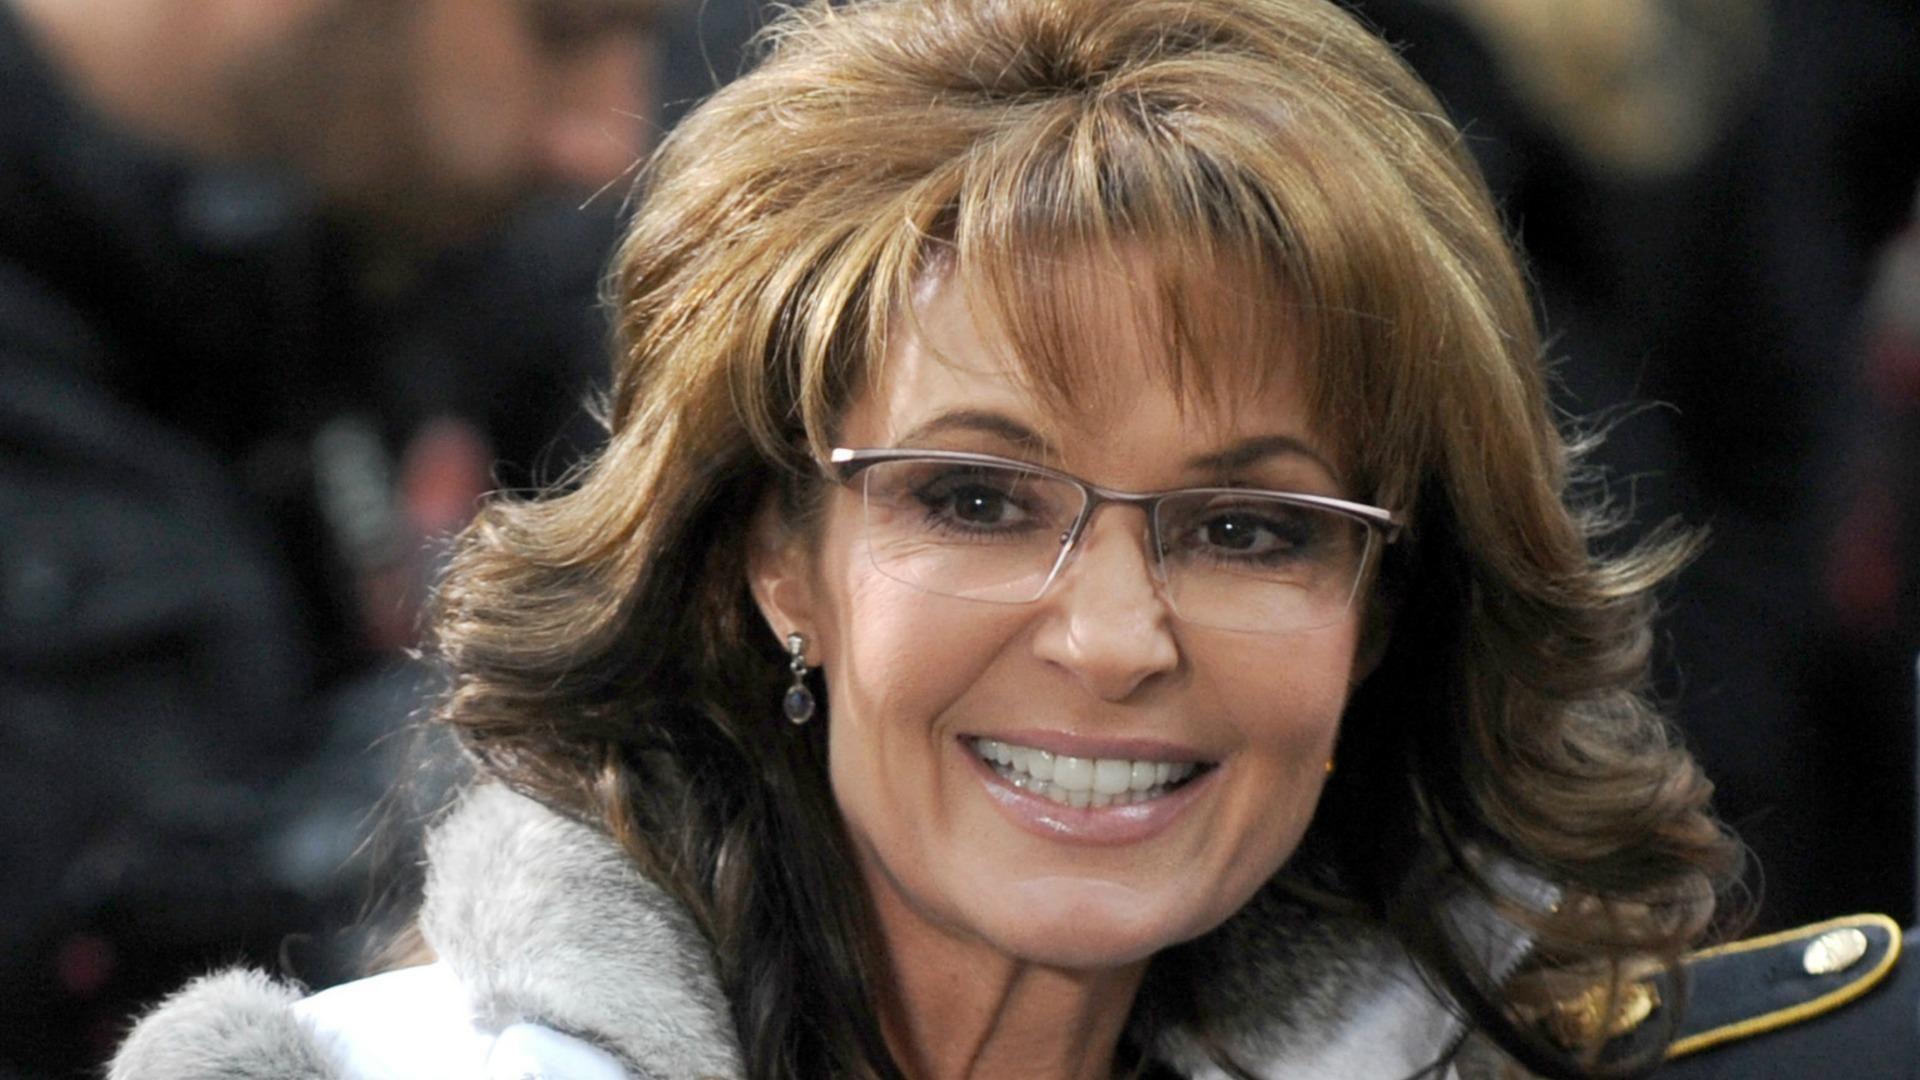 Joy Behar slams Sarah Palin regarding rumors she's joining The View